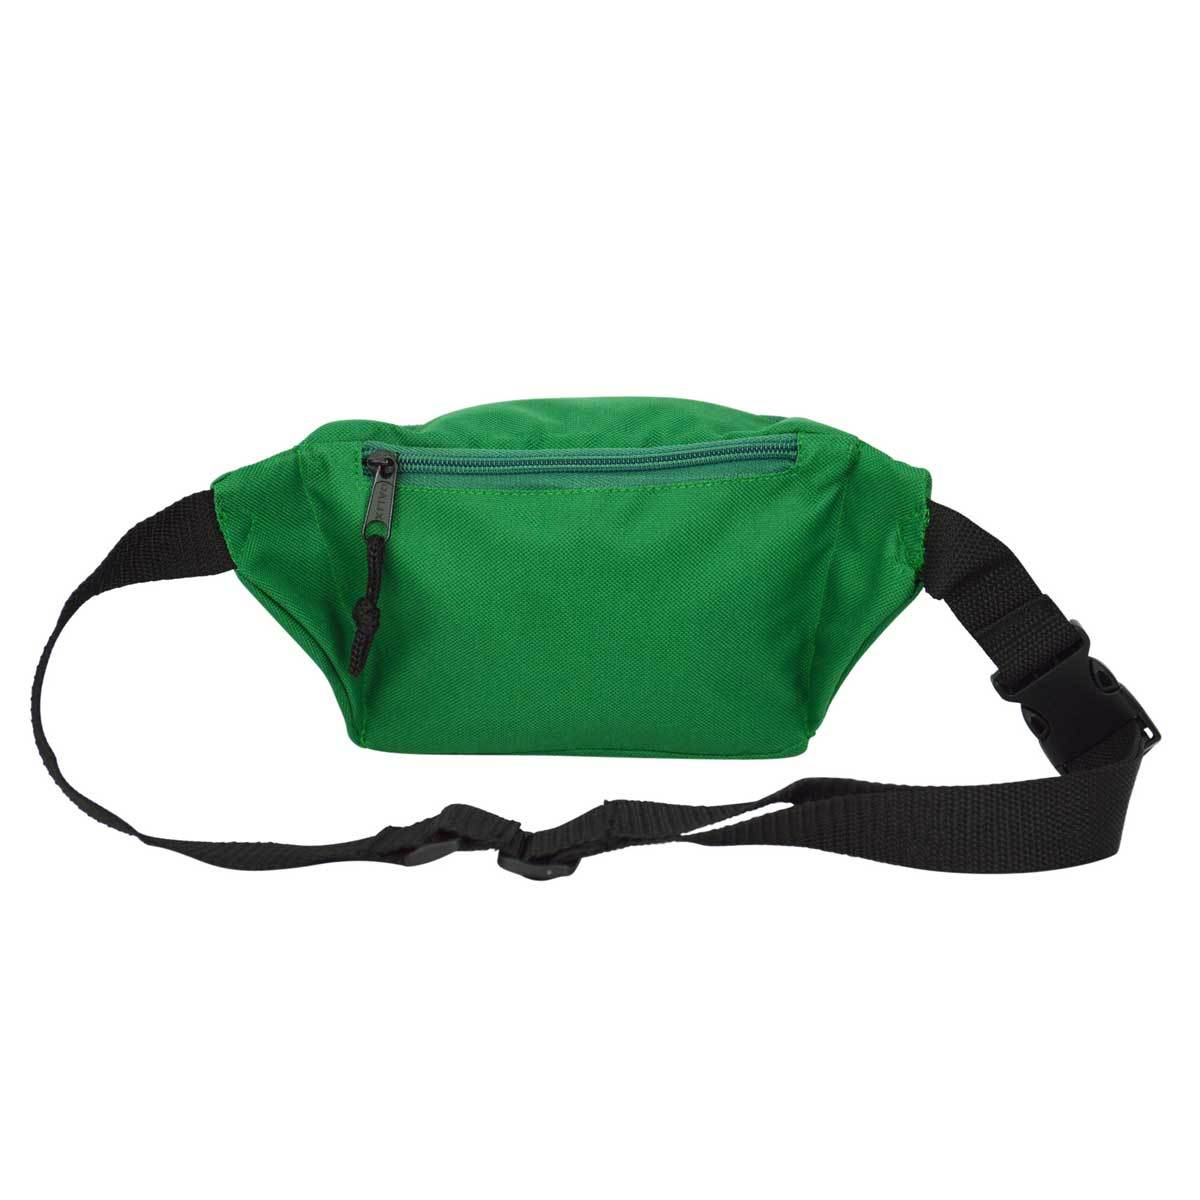 BELT BAG WITH POCKETS - Khaki Green